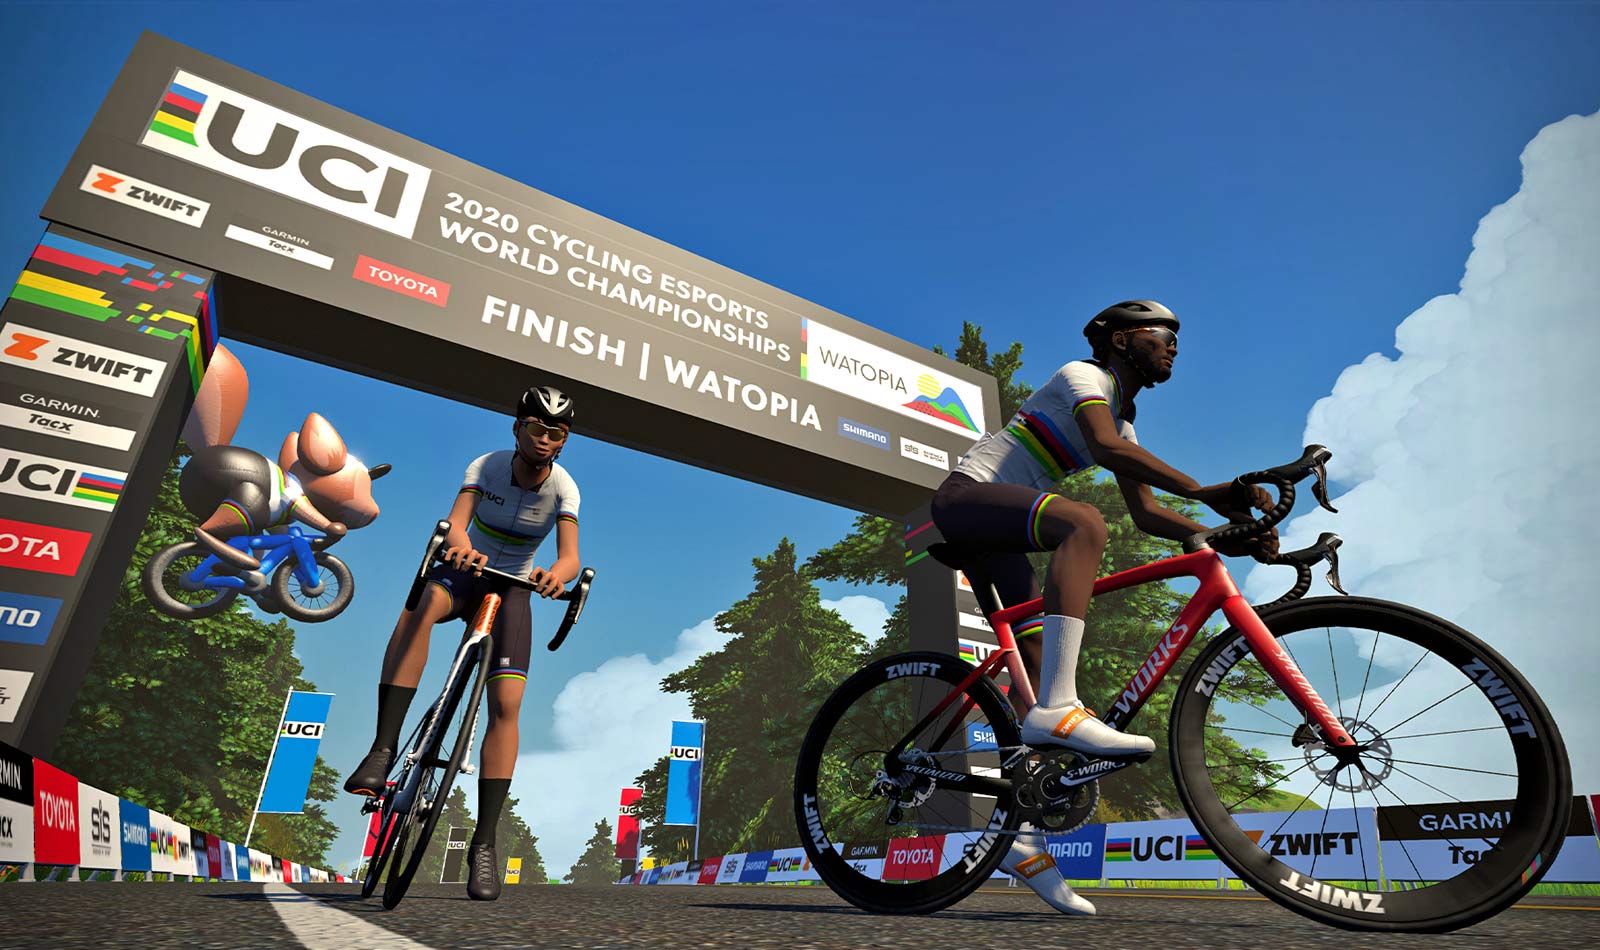 virtual eSports Champion rainbow stripes, opportunity for all to ride! - Bikerumor